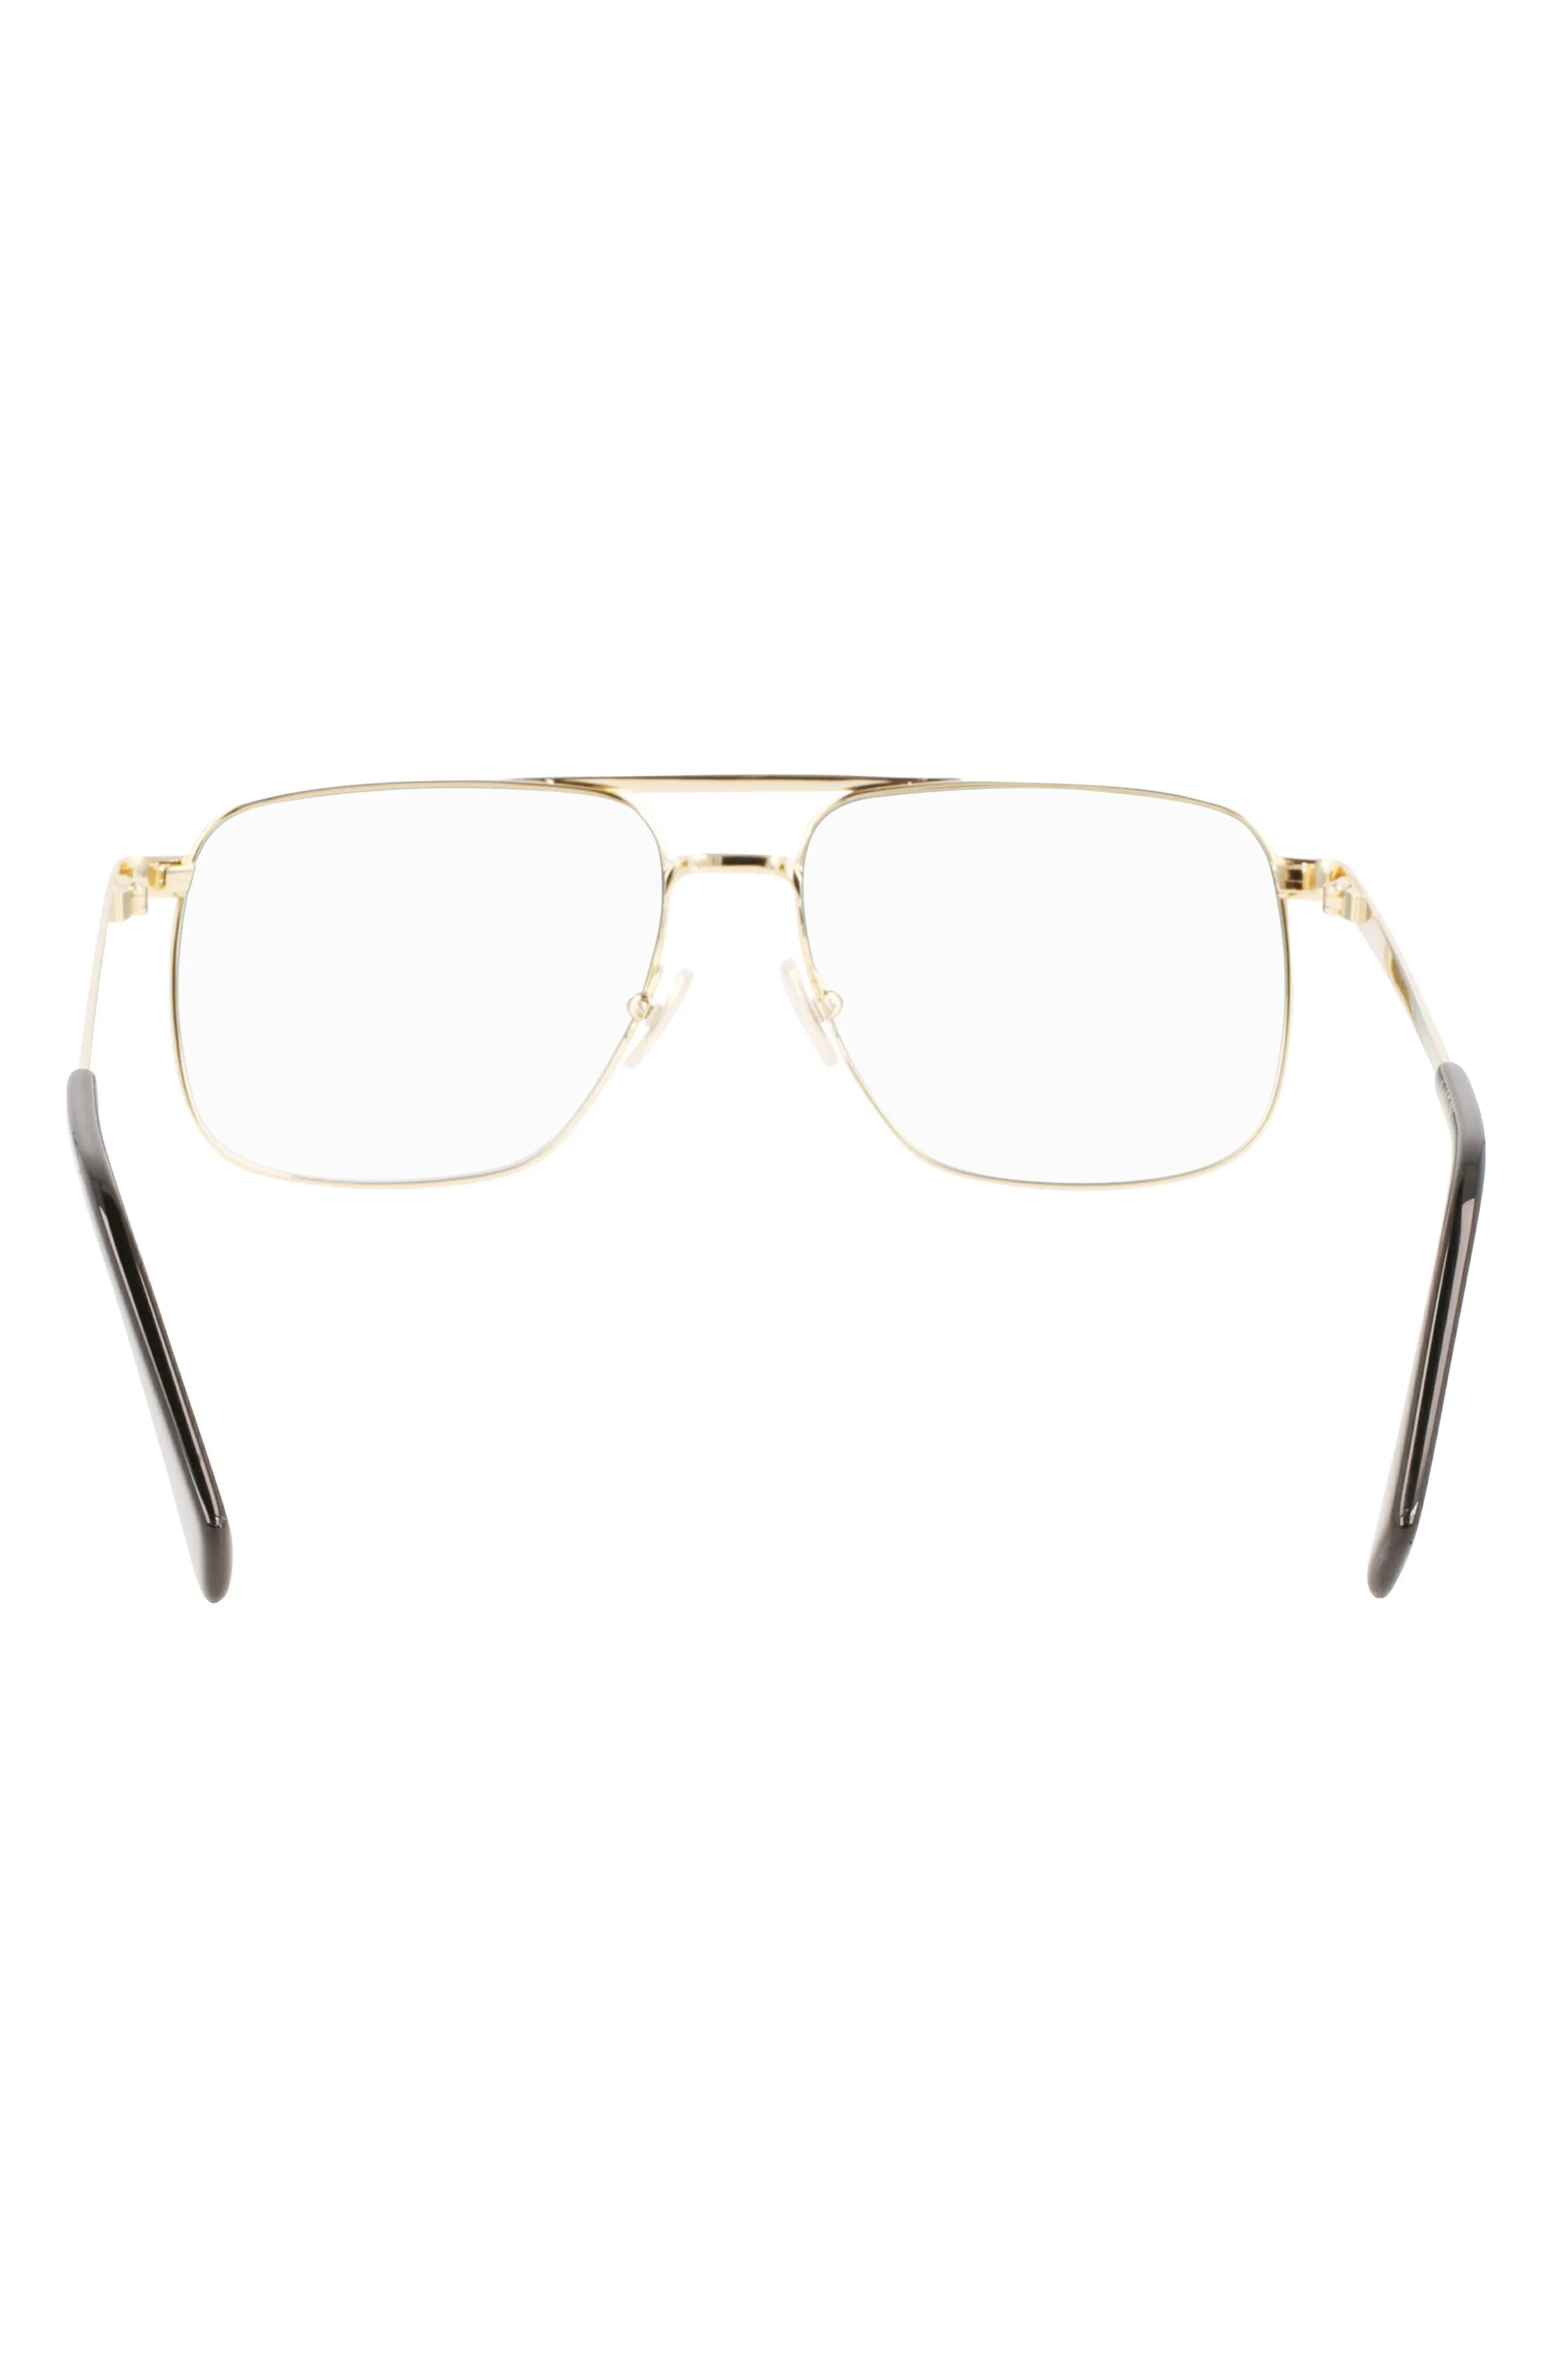 JL 58mm Rectangular Sunglasses in Gold /Gradient Petrol - 4